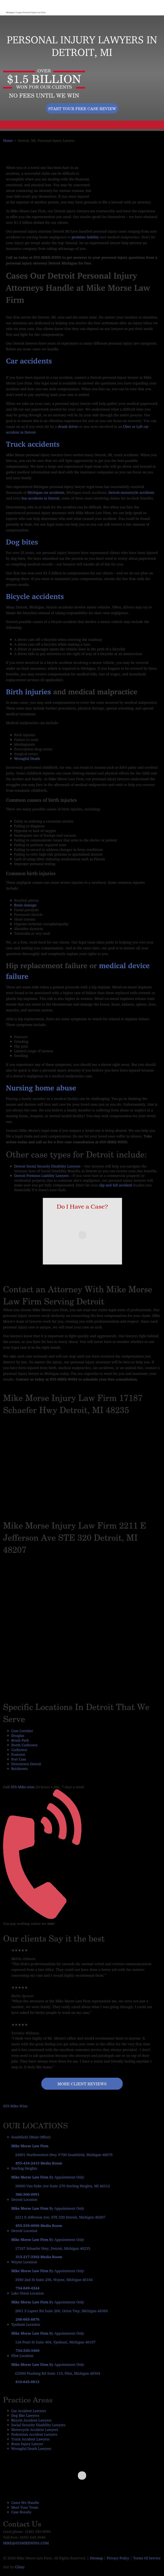 Mike Morse Injury Law Firm - Detroit MI Lawyers